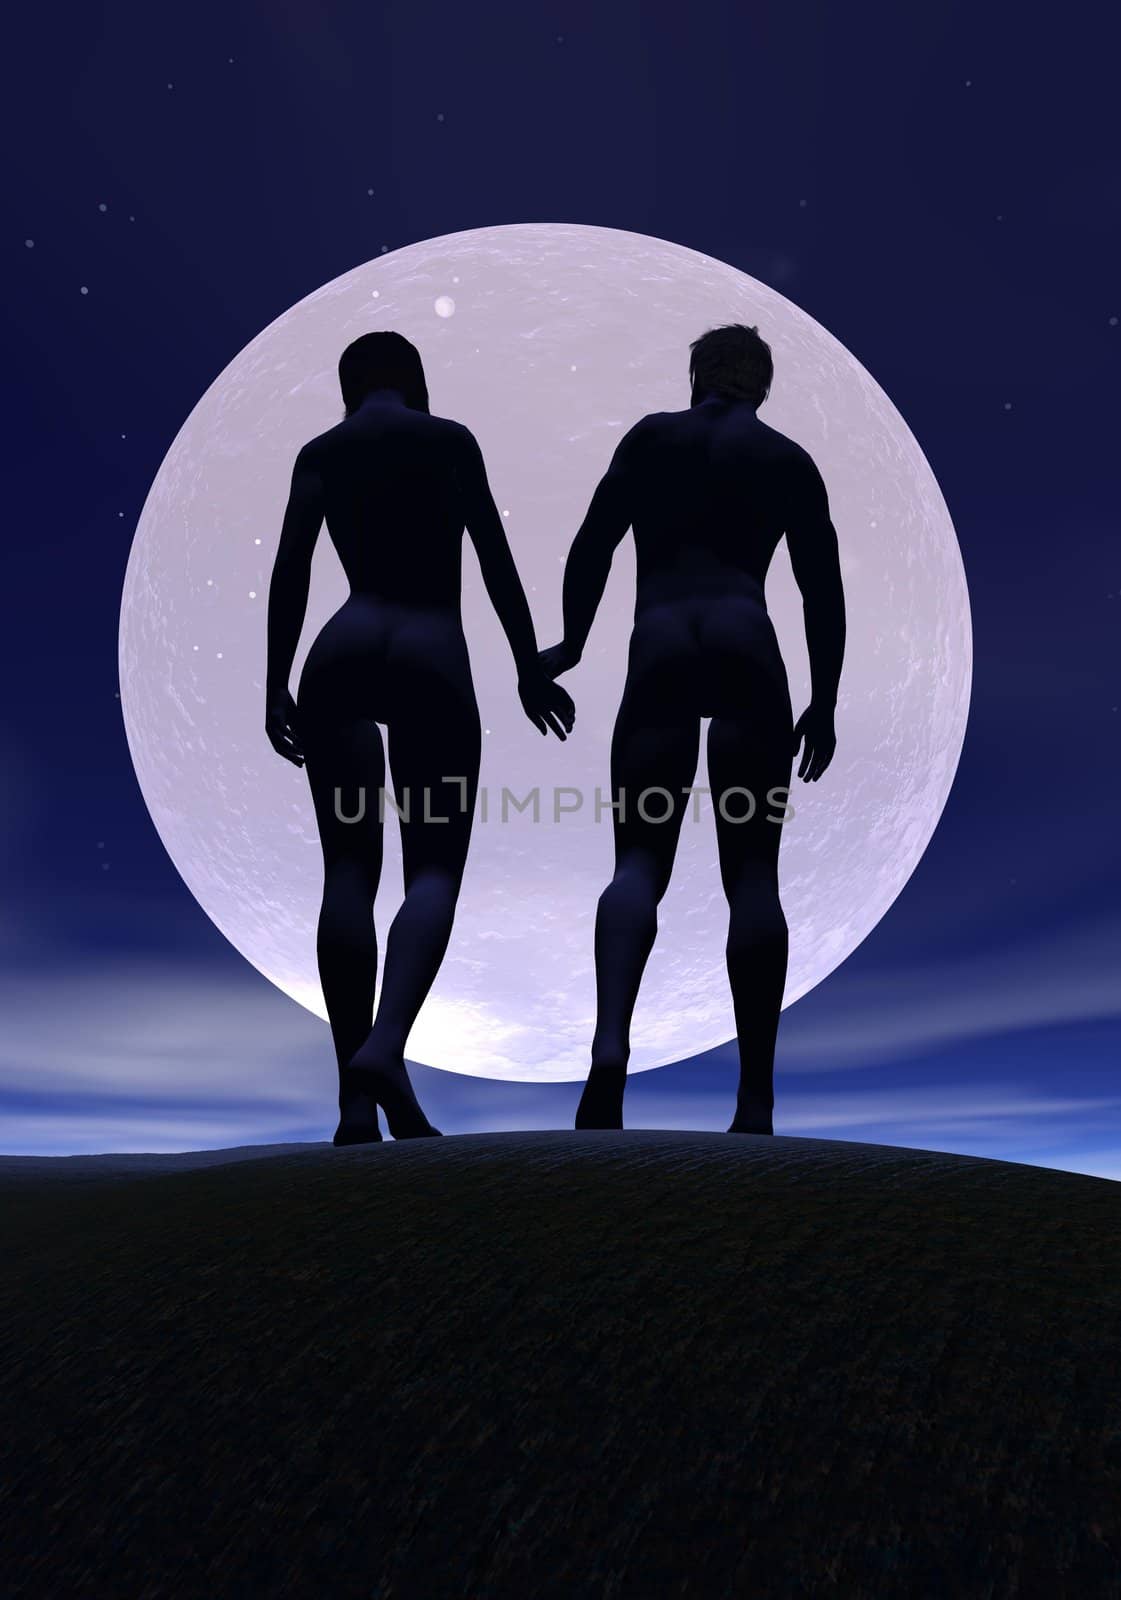 Lovers couple walking toward a beautiful full moon by night